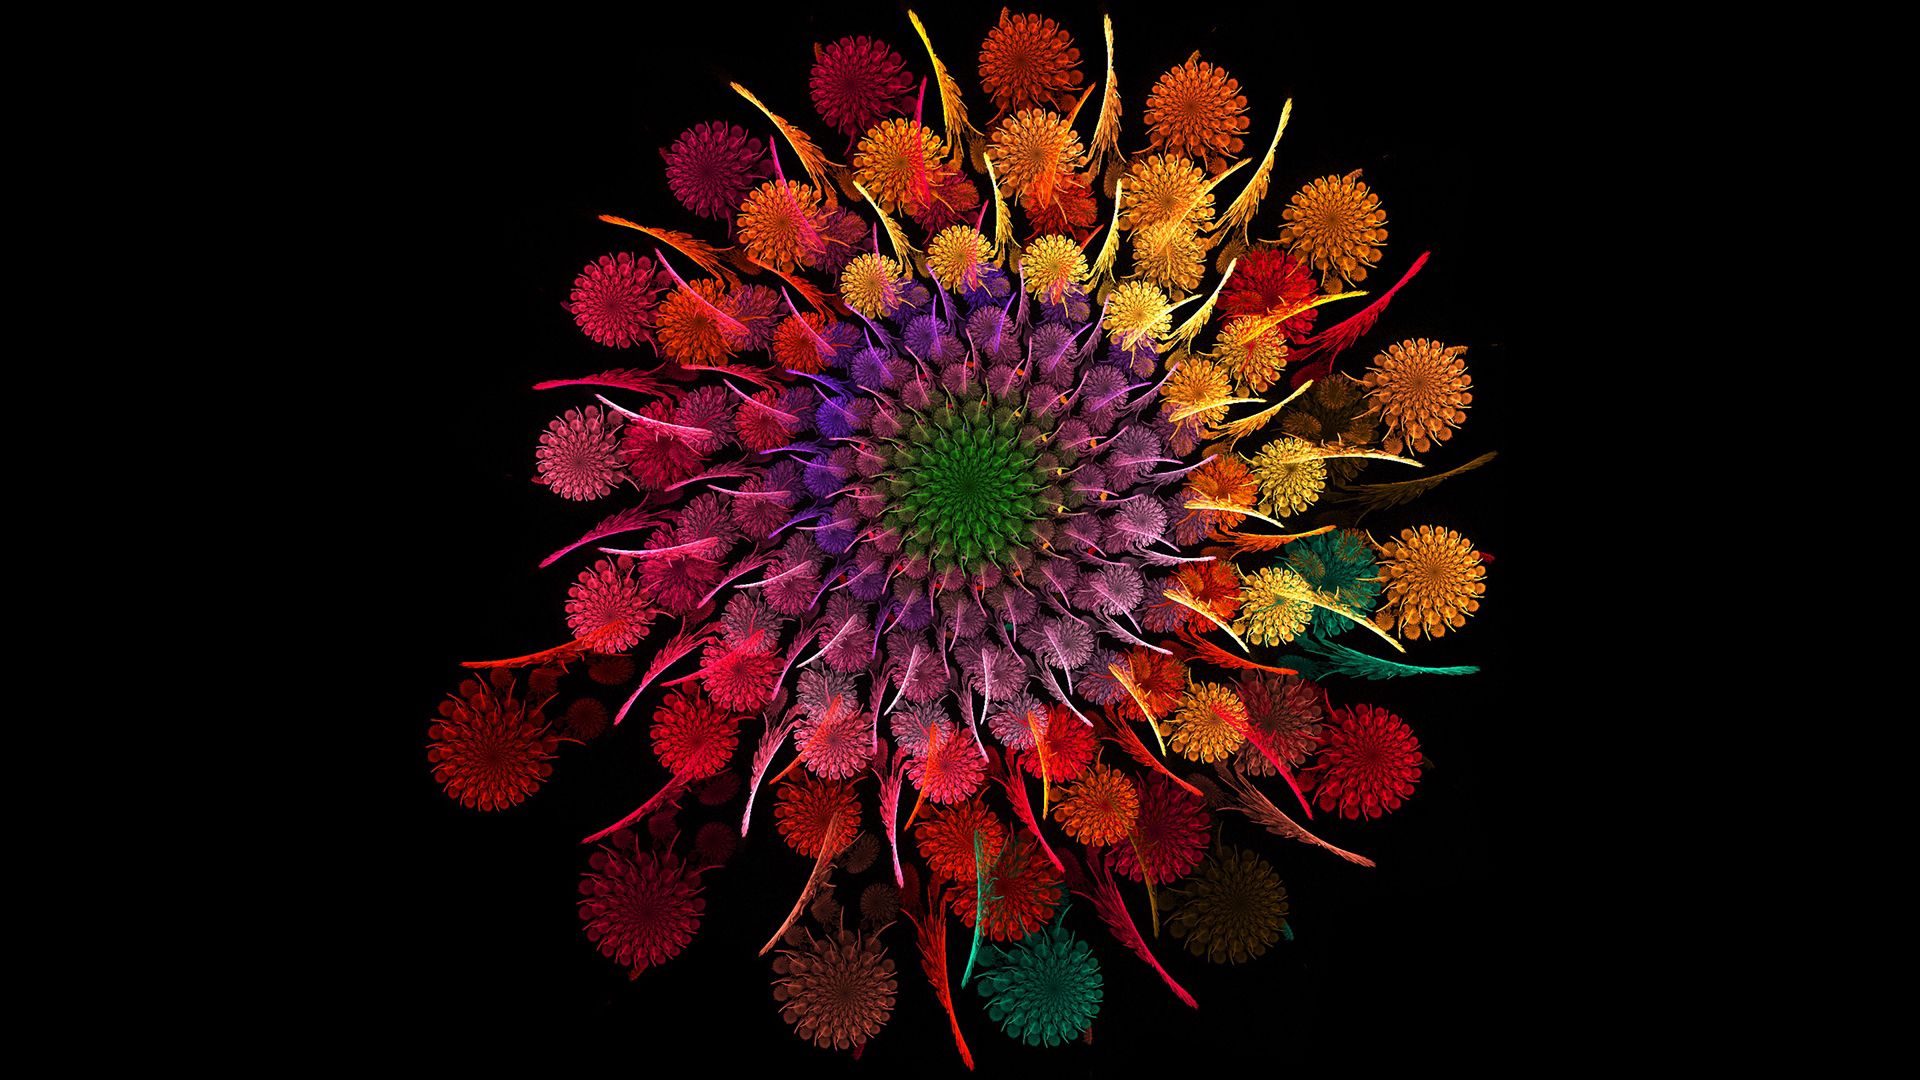 86317 Salvapantallas y fondos de pantalla Flor en tu teléfono. Descarga imágenes de abstracción, flor, fractal, arcoíris, iridiscente, espiral gratis